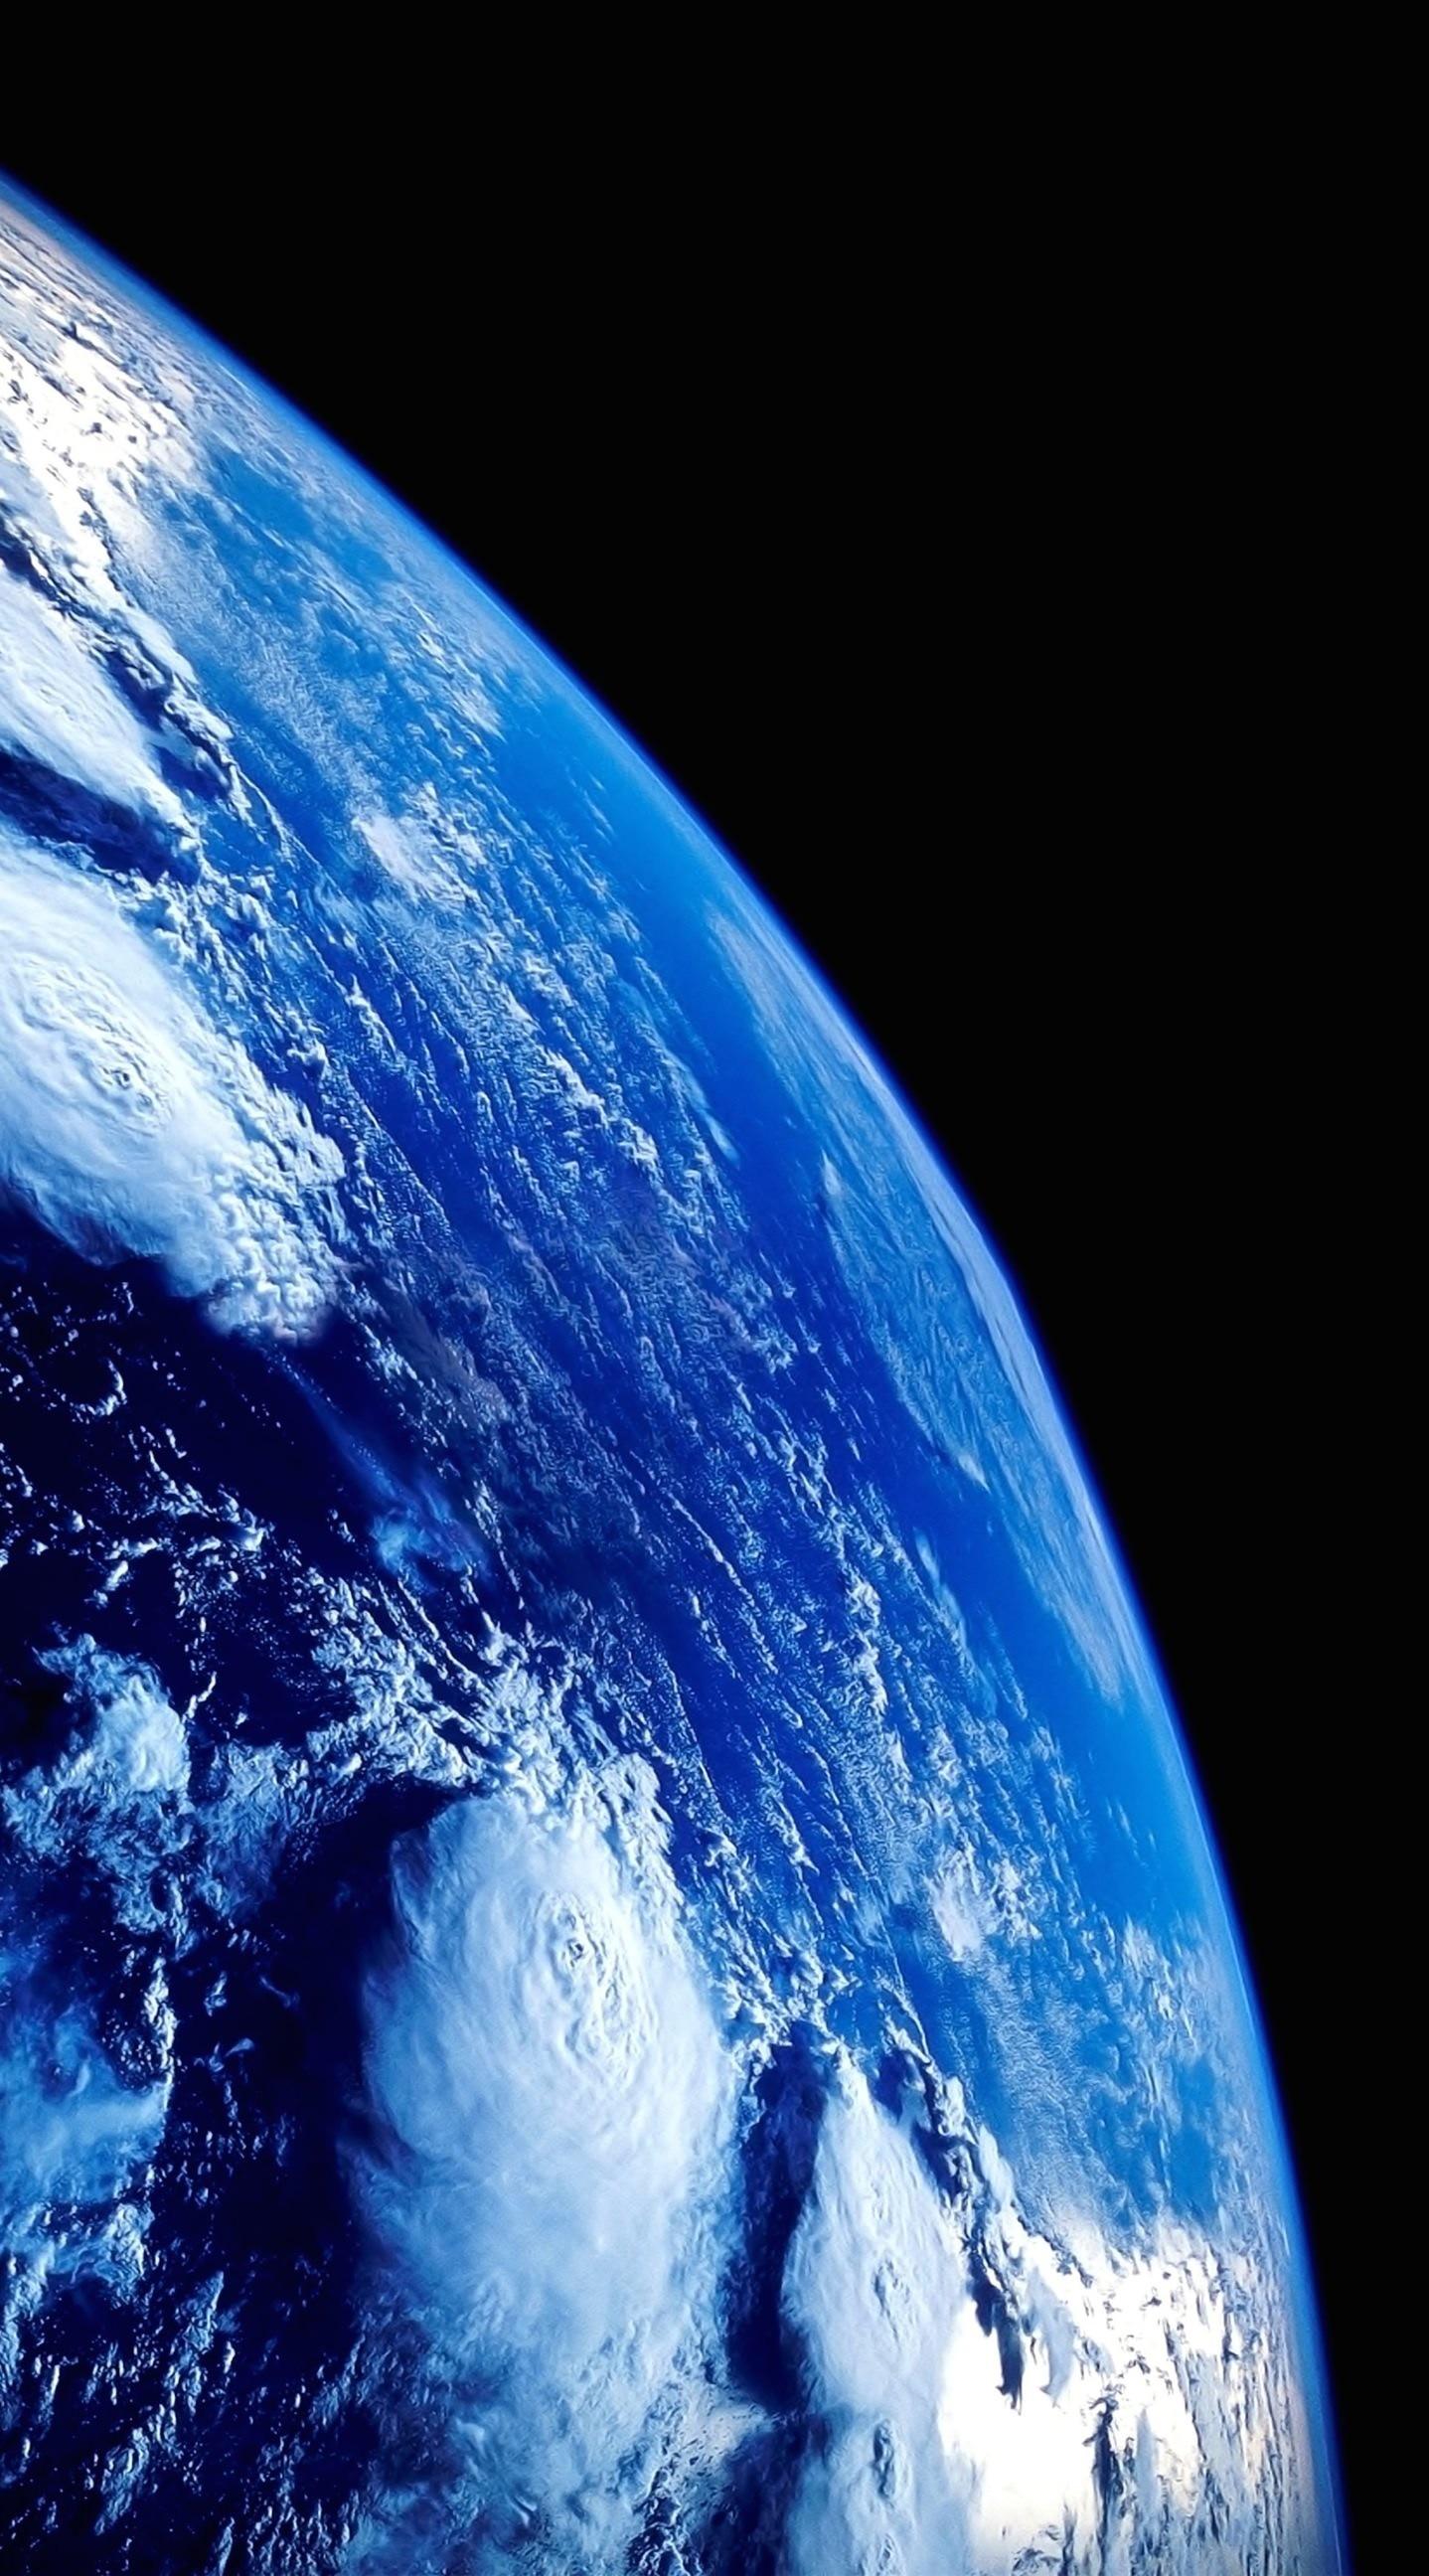 HD wallpaper: Earth wallpaper, space art, planet earth, planet - space,  globe - man made object | Wallpaper Flare